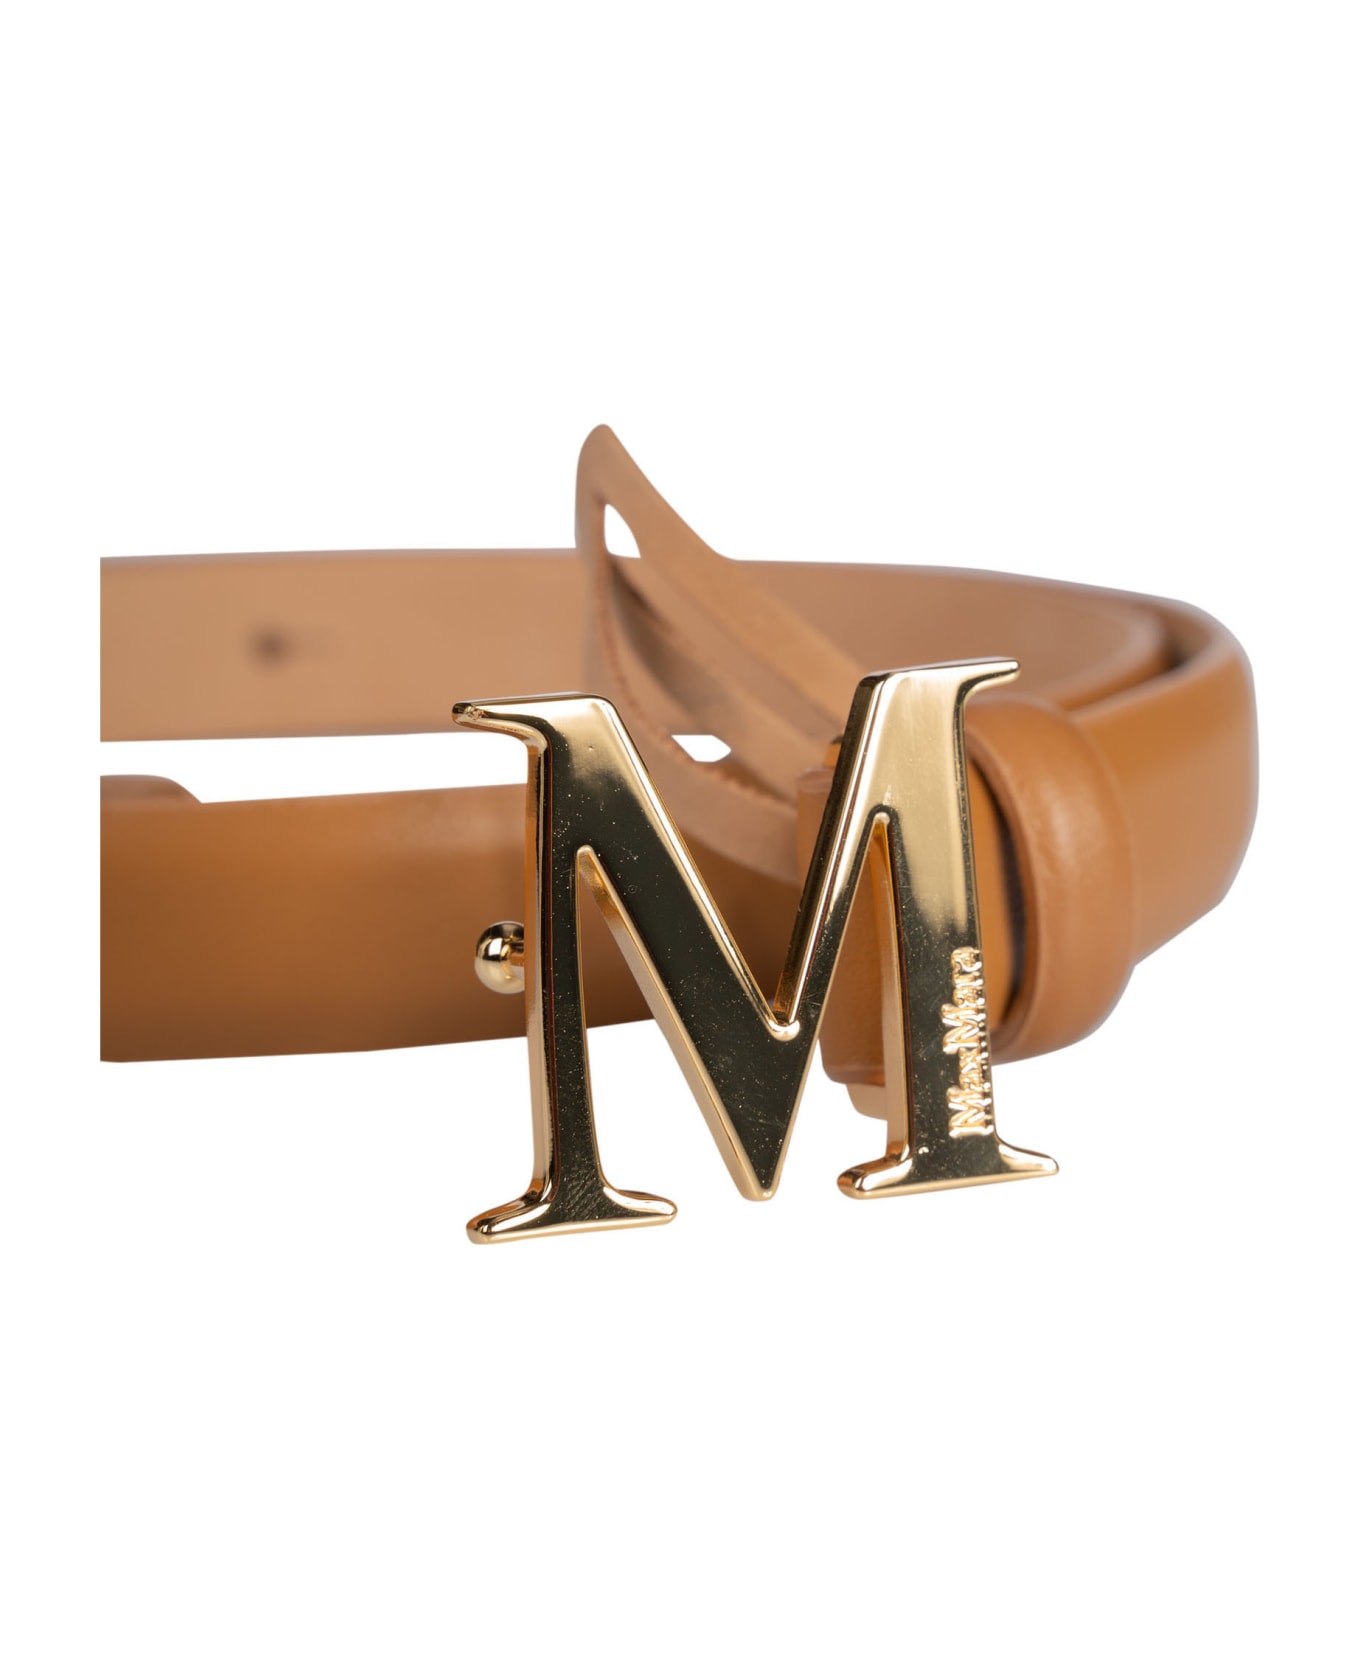 Max Mara Classic M Buckled Belt - Rust